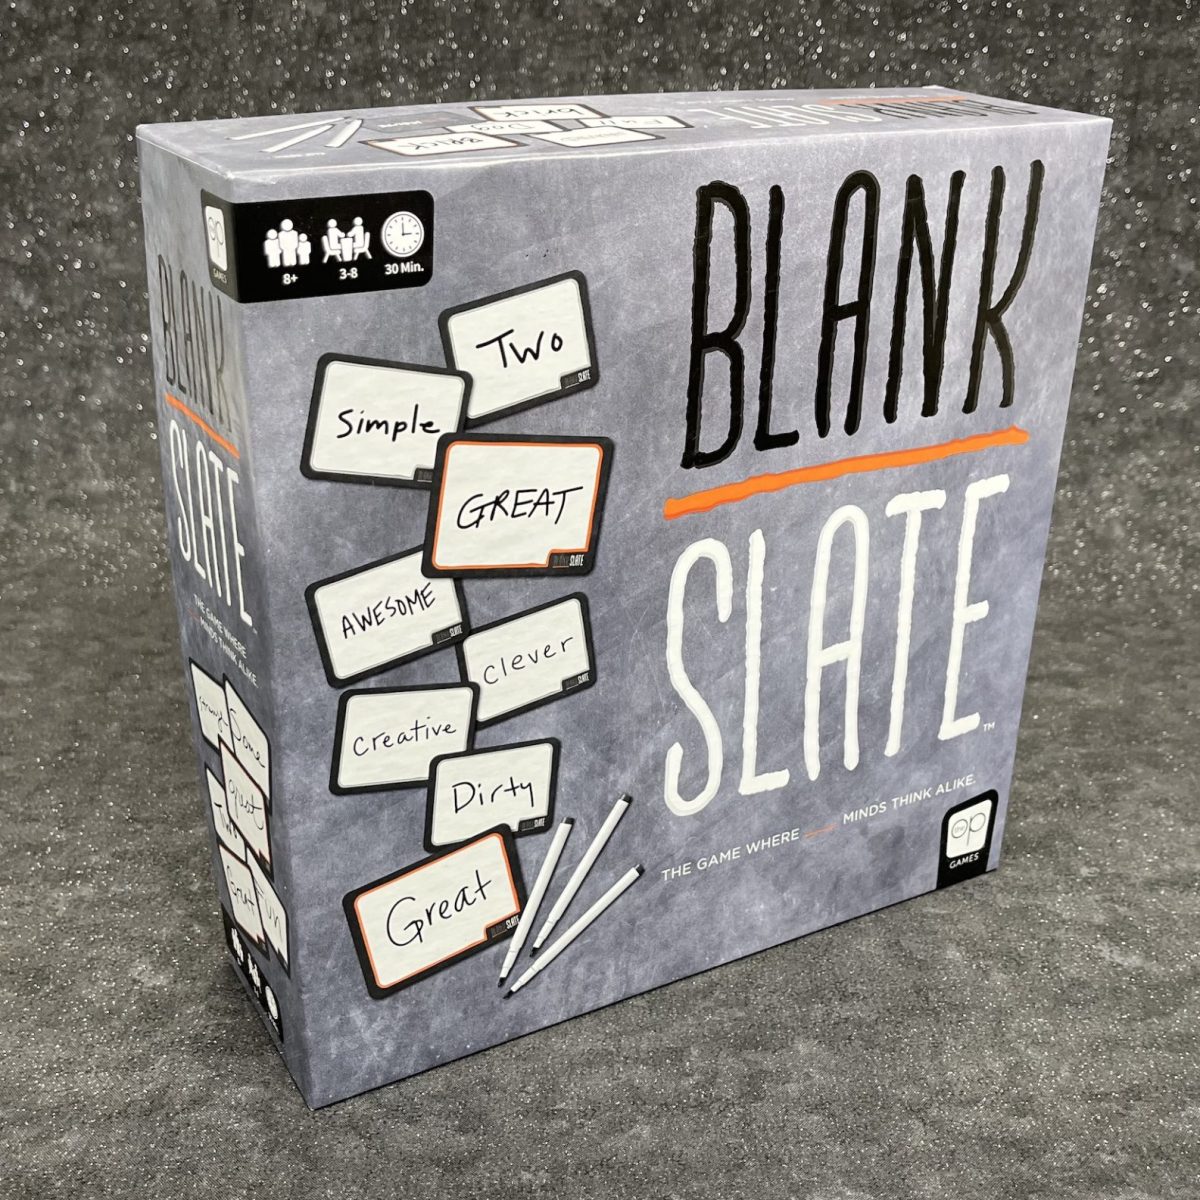  BLANK SLATE™ - The Game Where Great Minds Think Alike